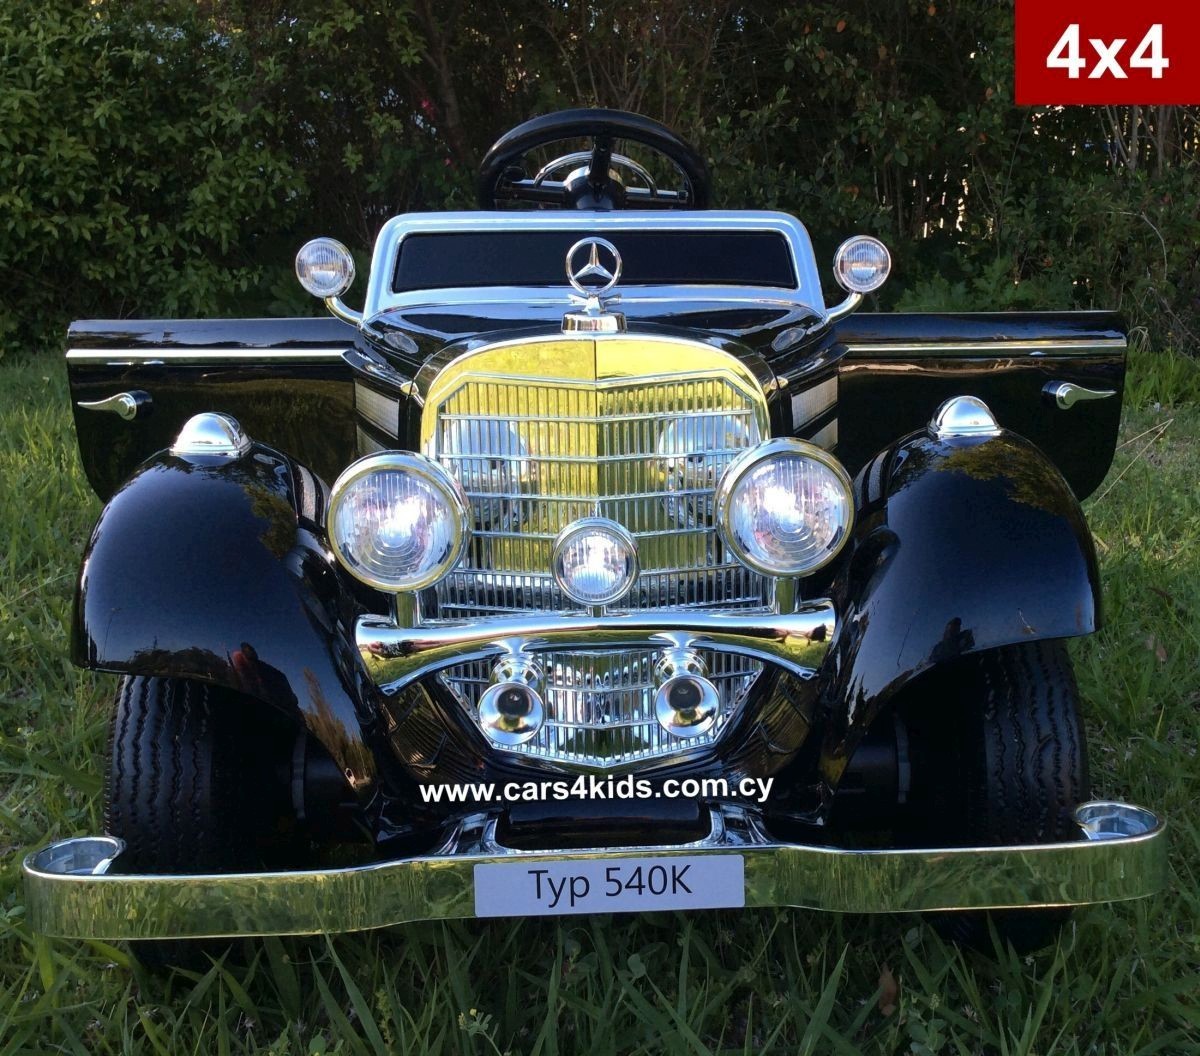 4x4 Mercedes-Benz Typ50K Painting Black with 2.4G R/C under License